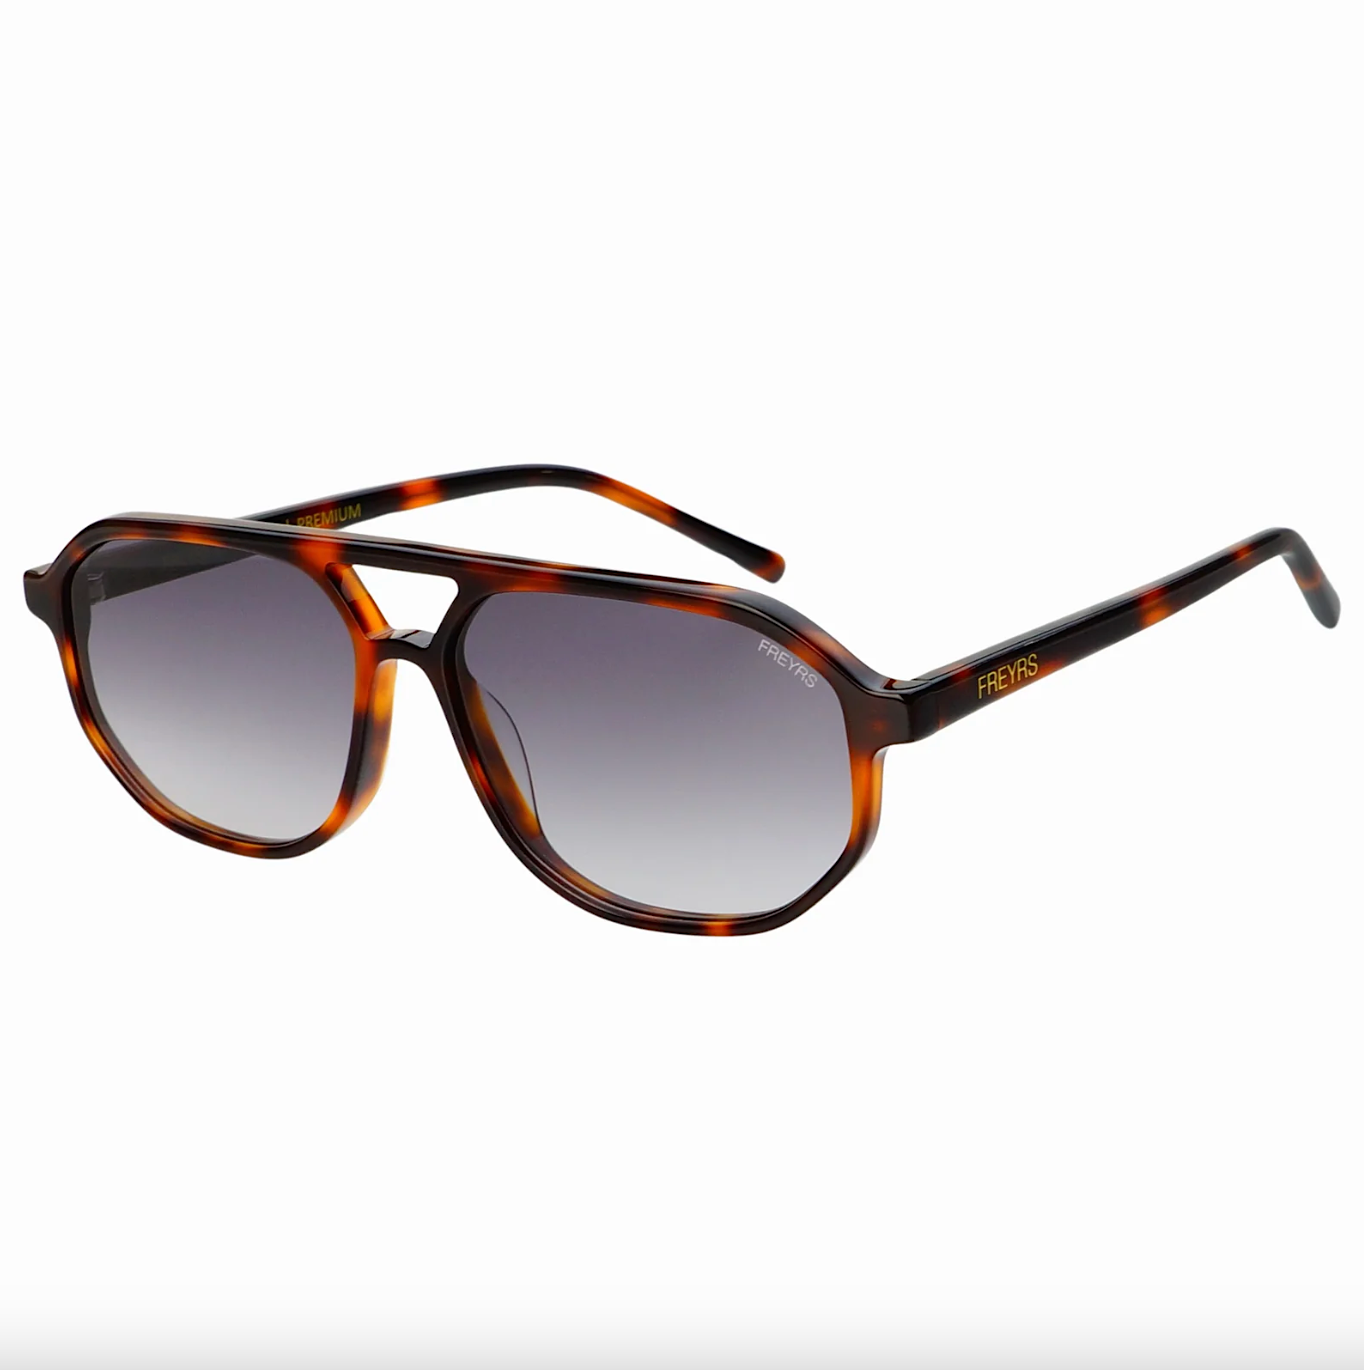 fenix freyrs sunglasses